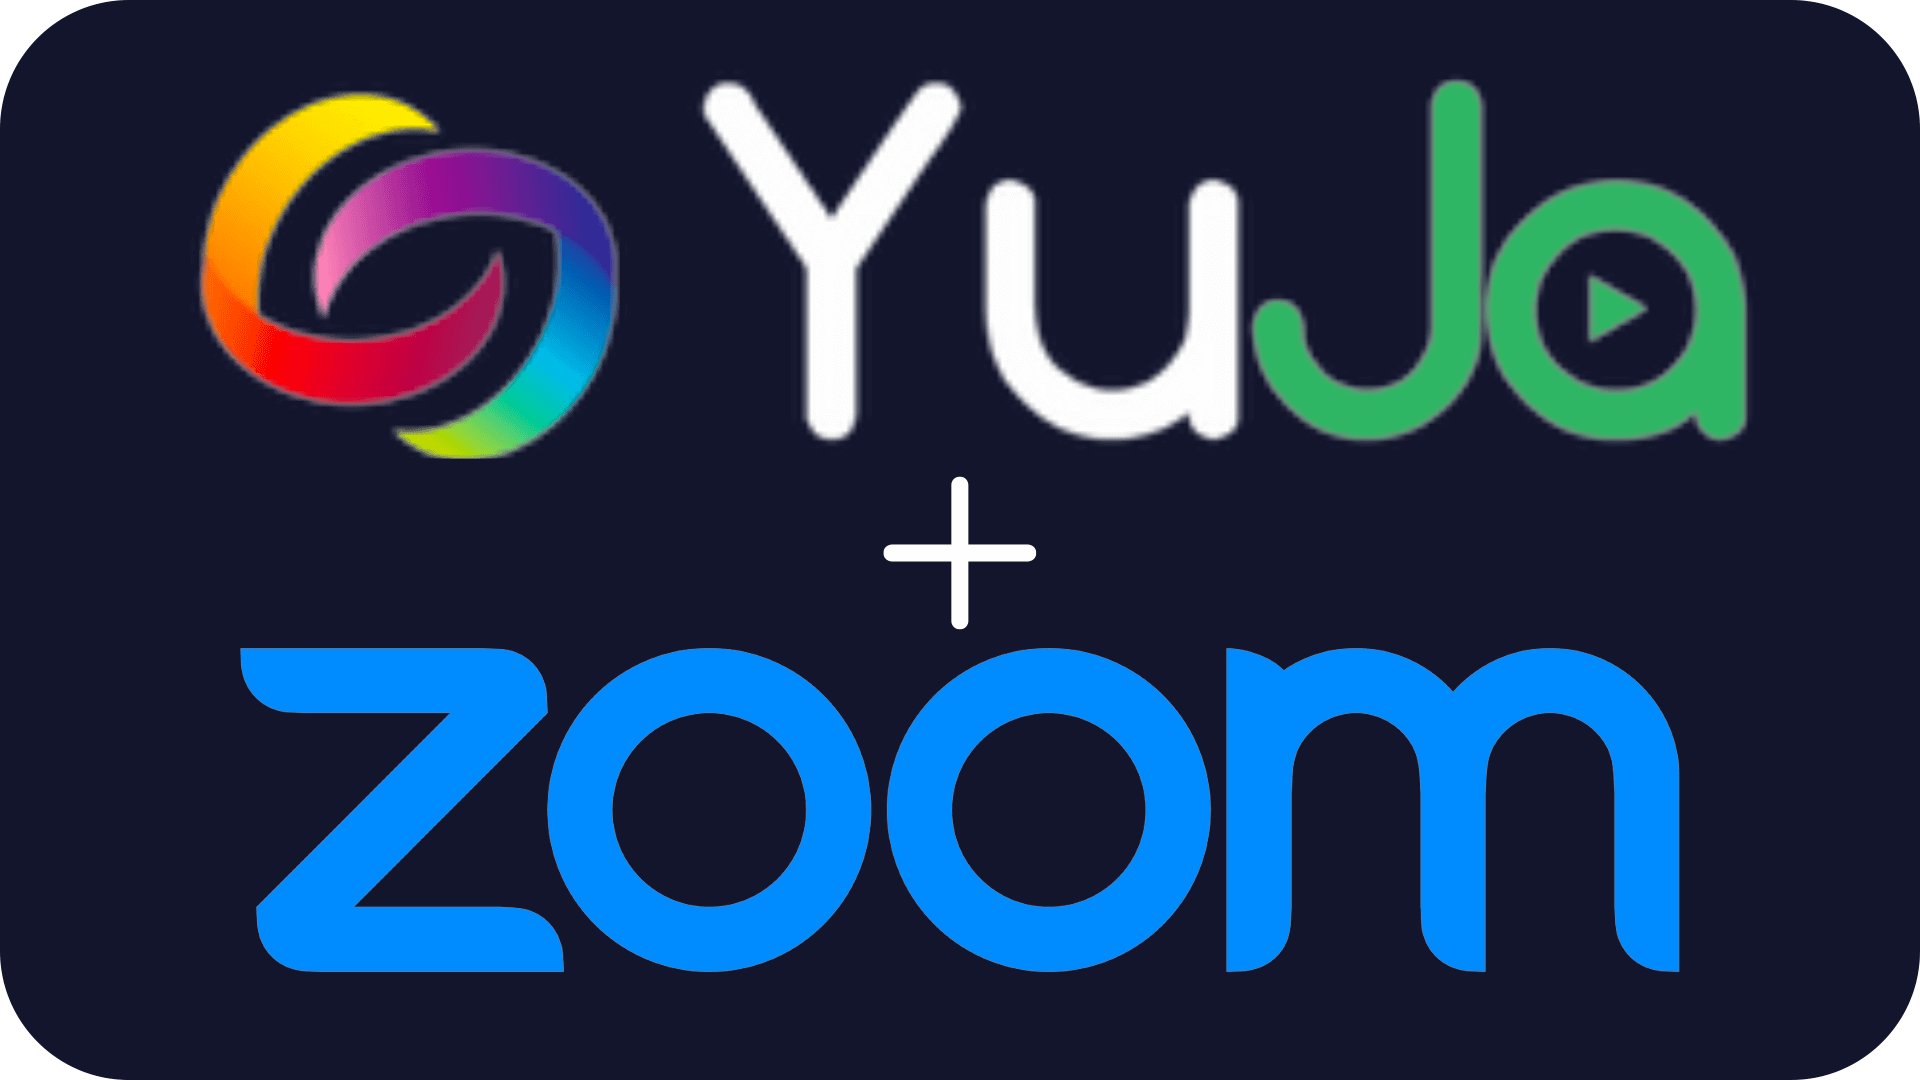 YuJa + Zoom logos.